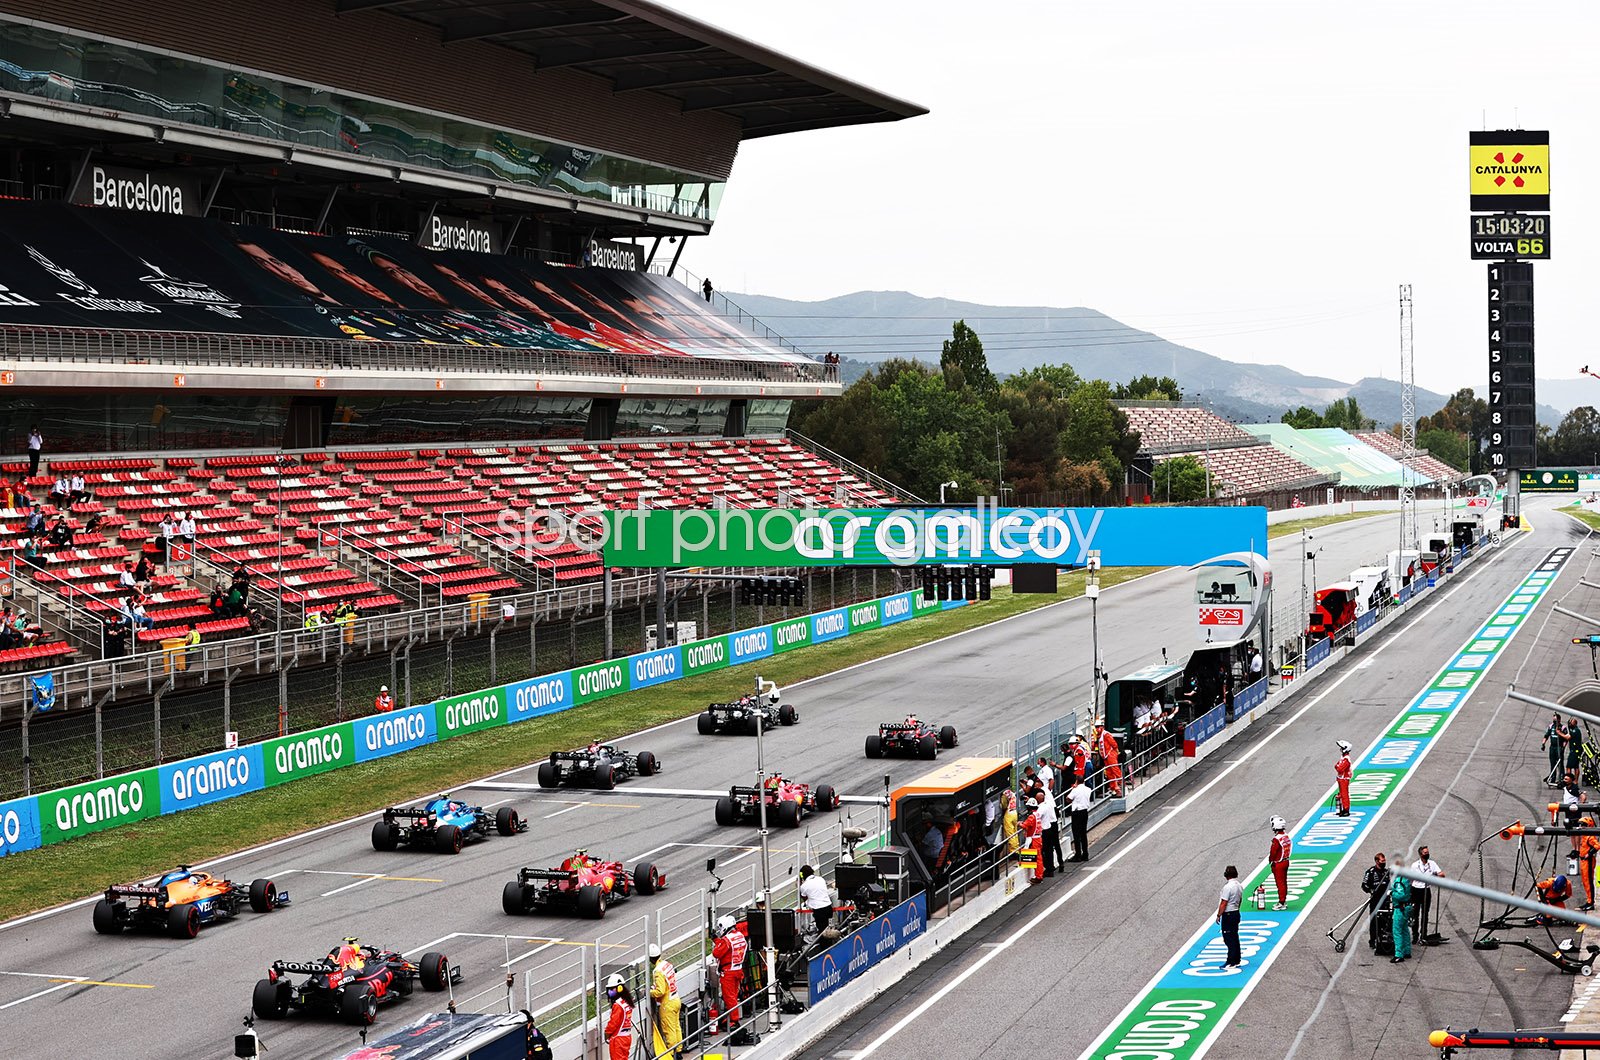 Starting Grid F1 Grand Prix Barcelona Spain 2021 Images Motor Racing Posters